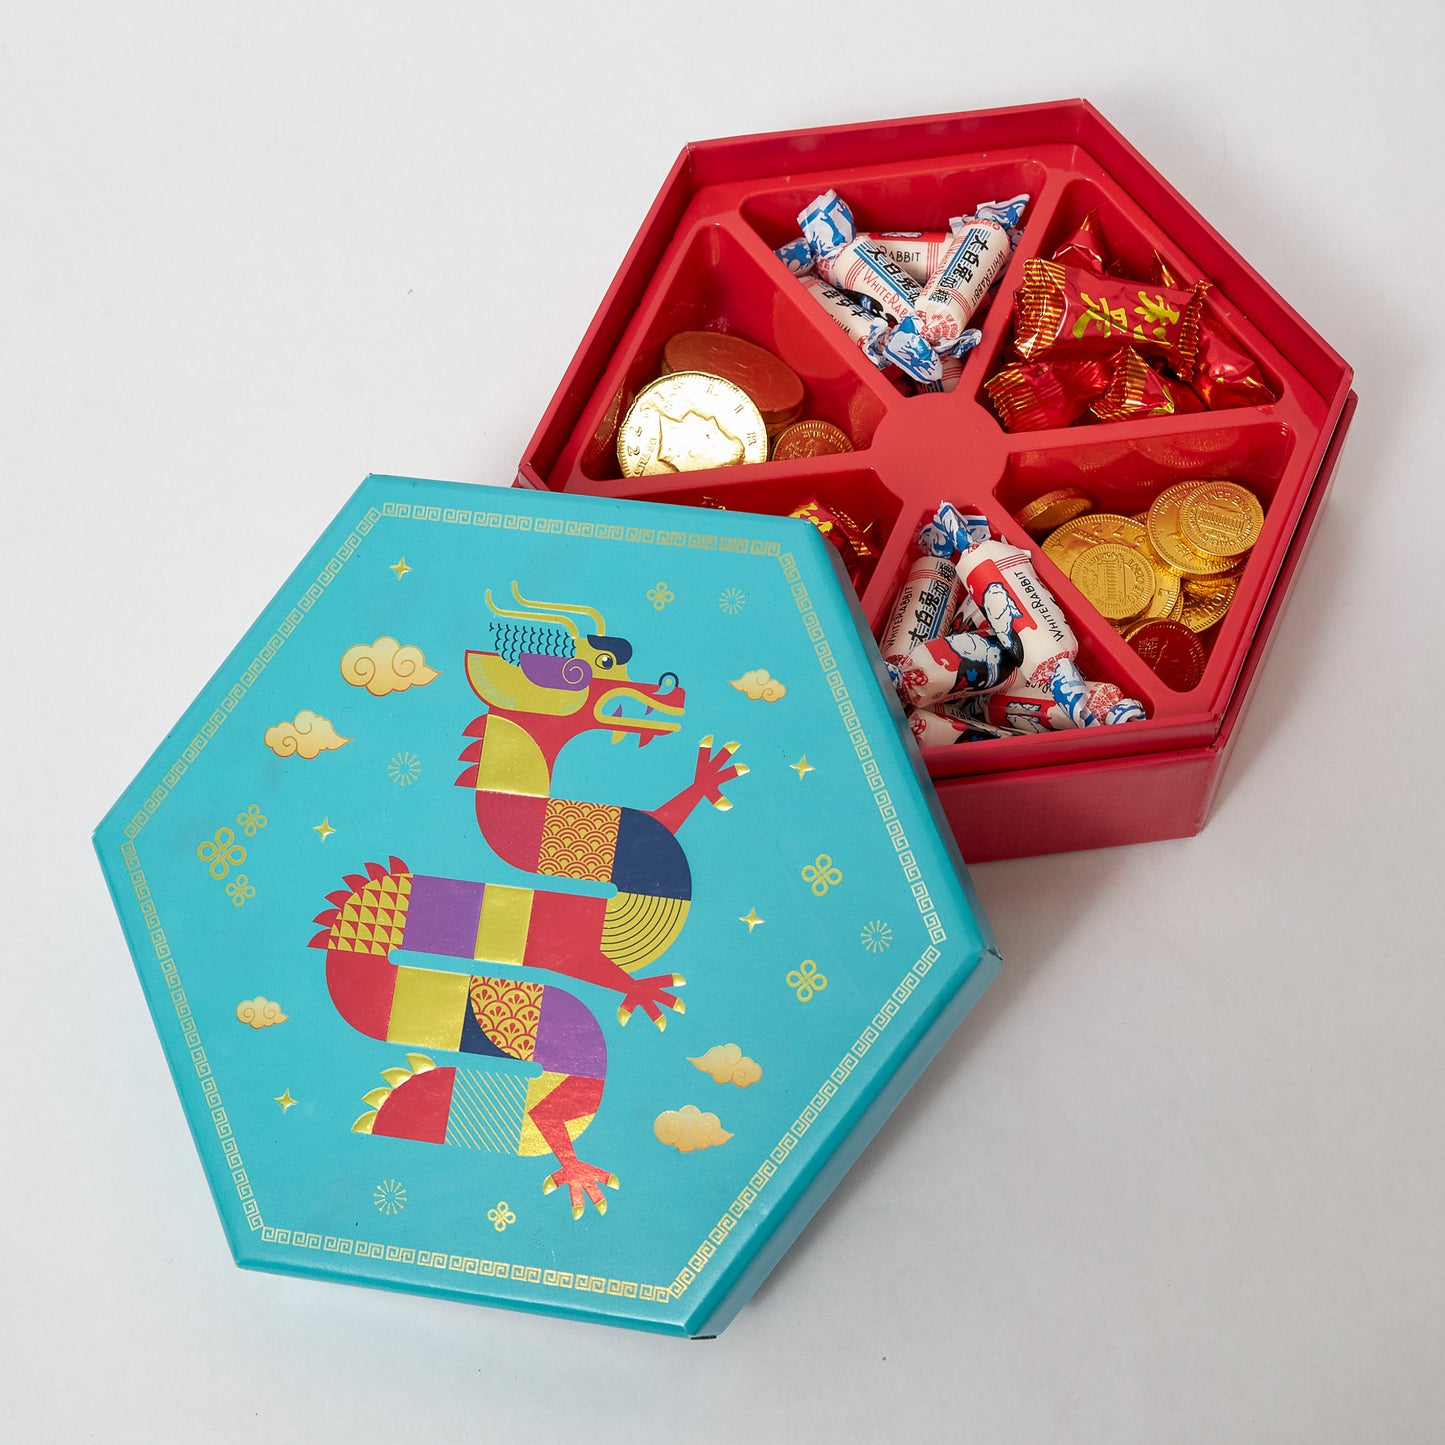 Lunar New Year gift set, candy box